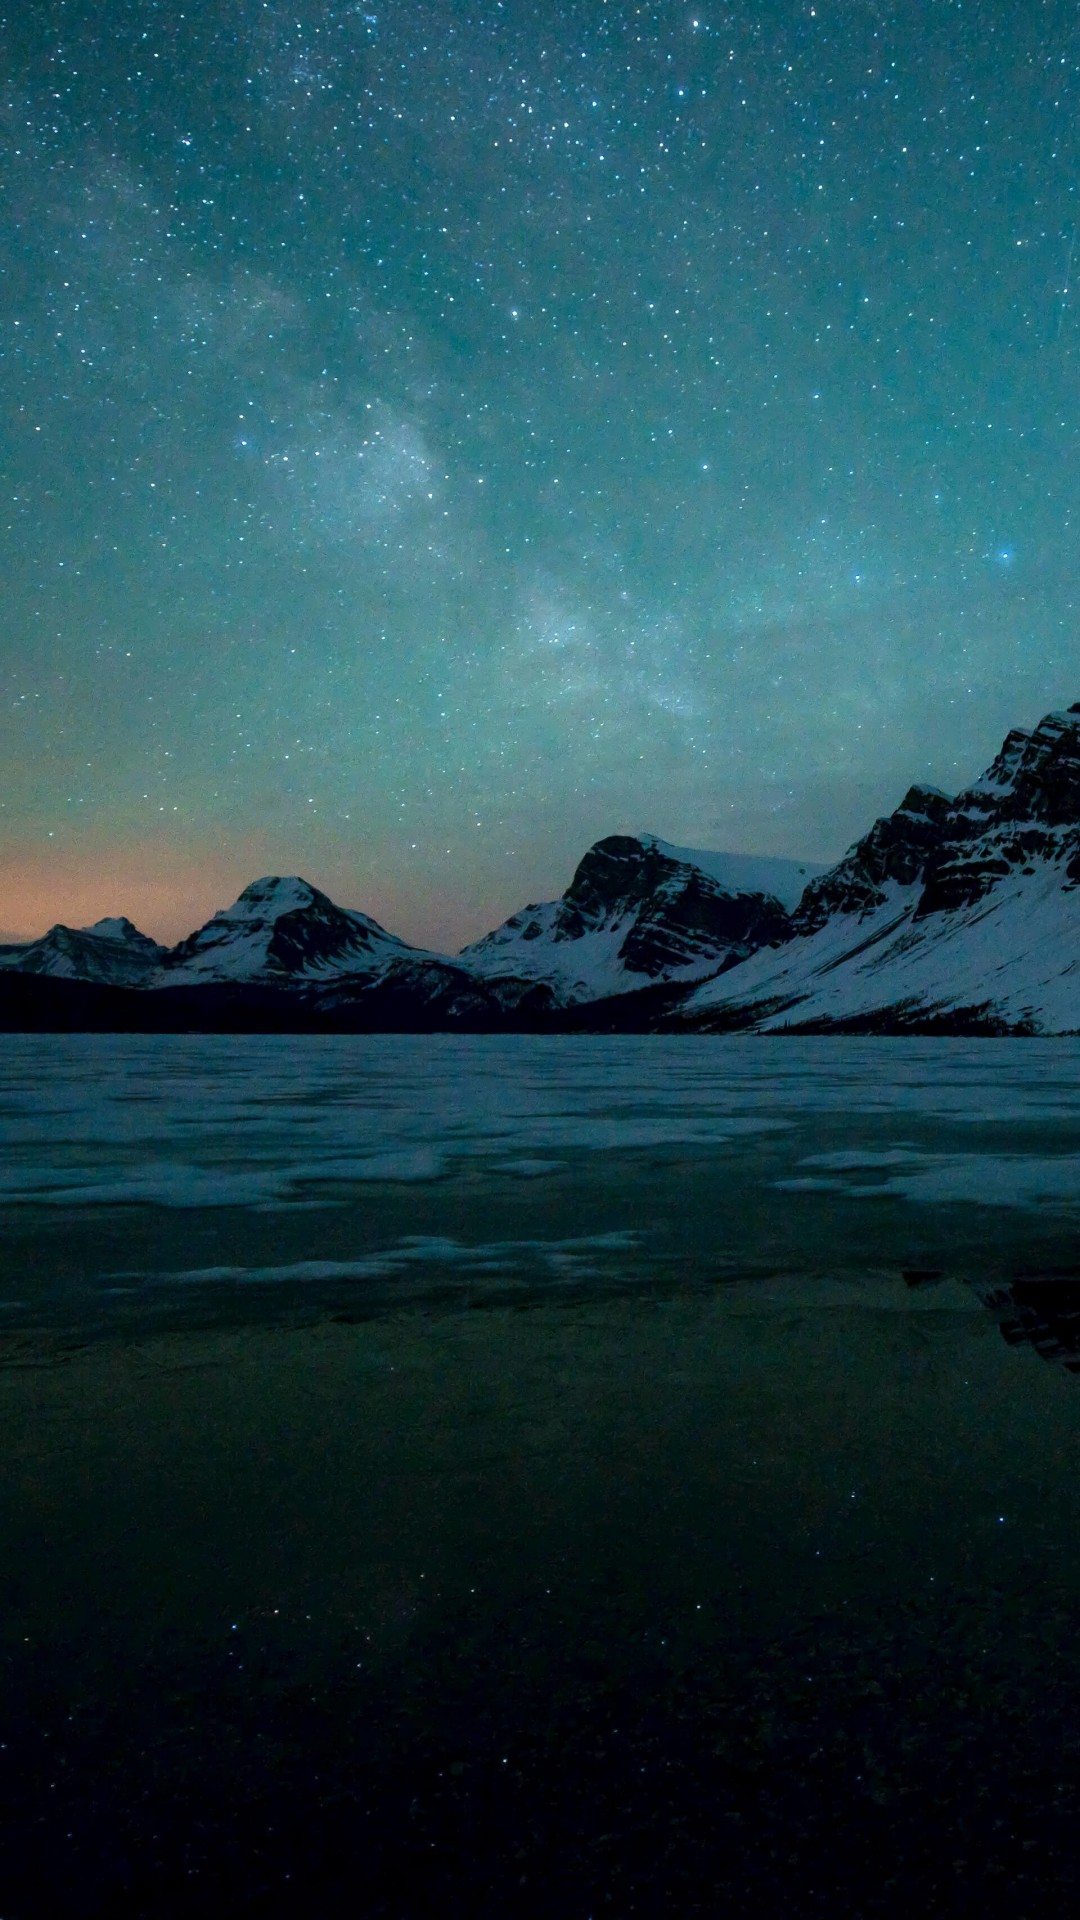 Milky Way over Bow Lake, Alberta, Canada Wallpaper for SONY Xperia Z3